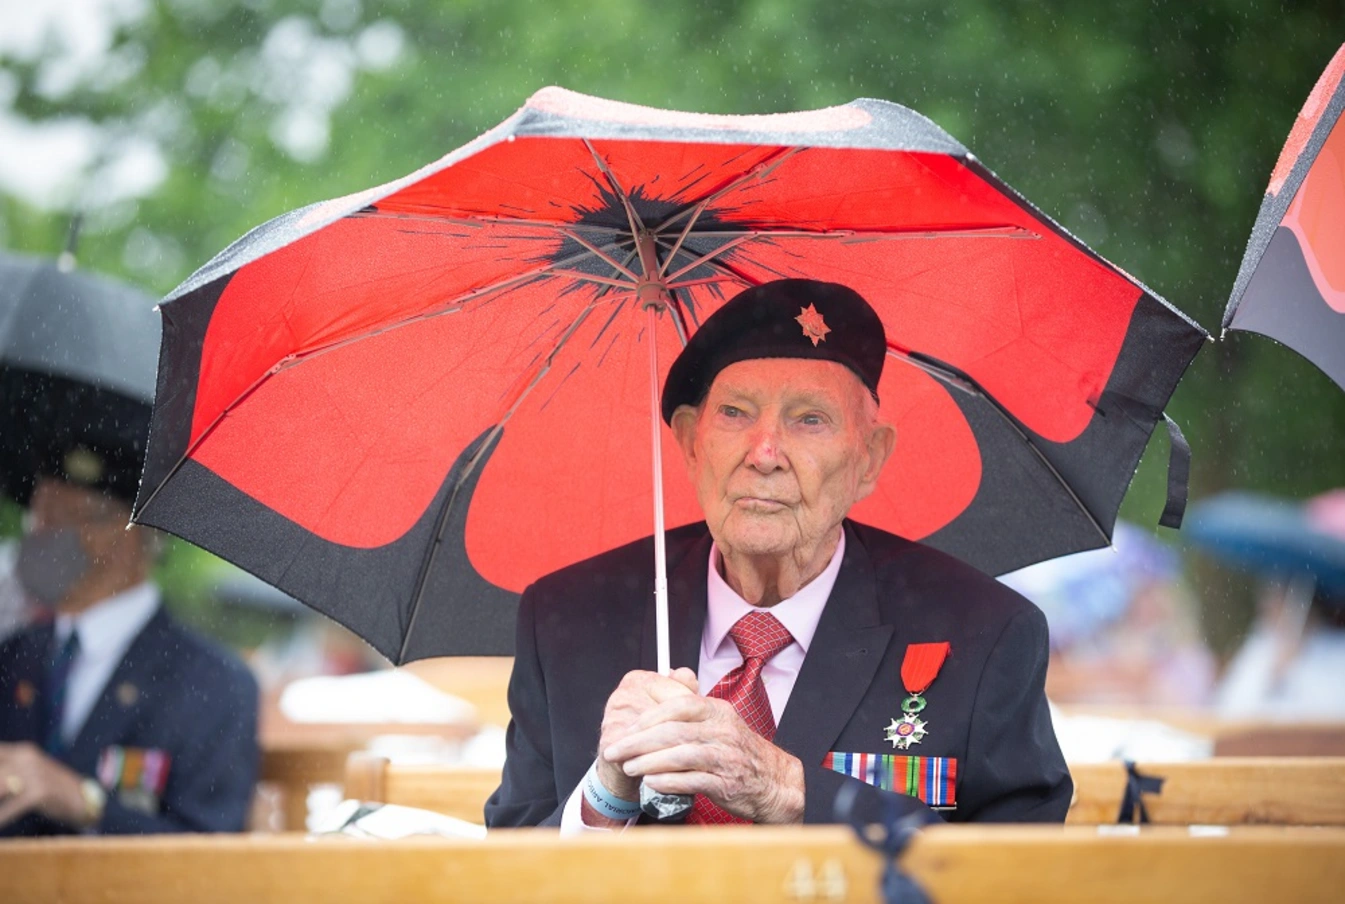 Normandy veteran sitting under umbrella at the National Memorial Arboretum